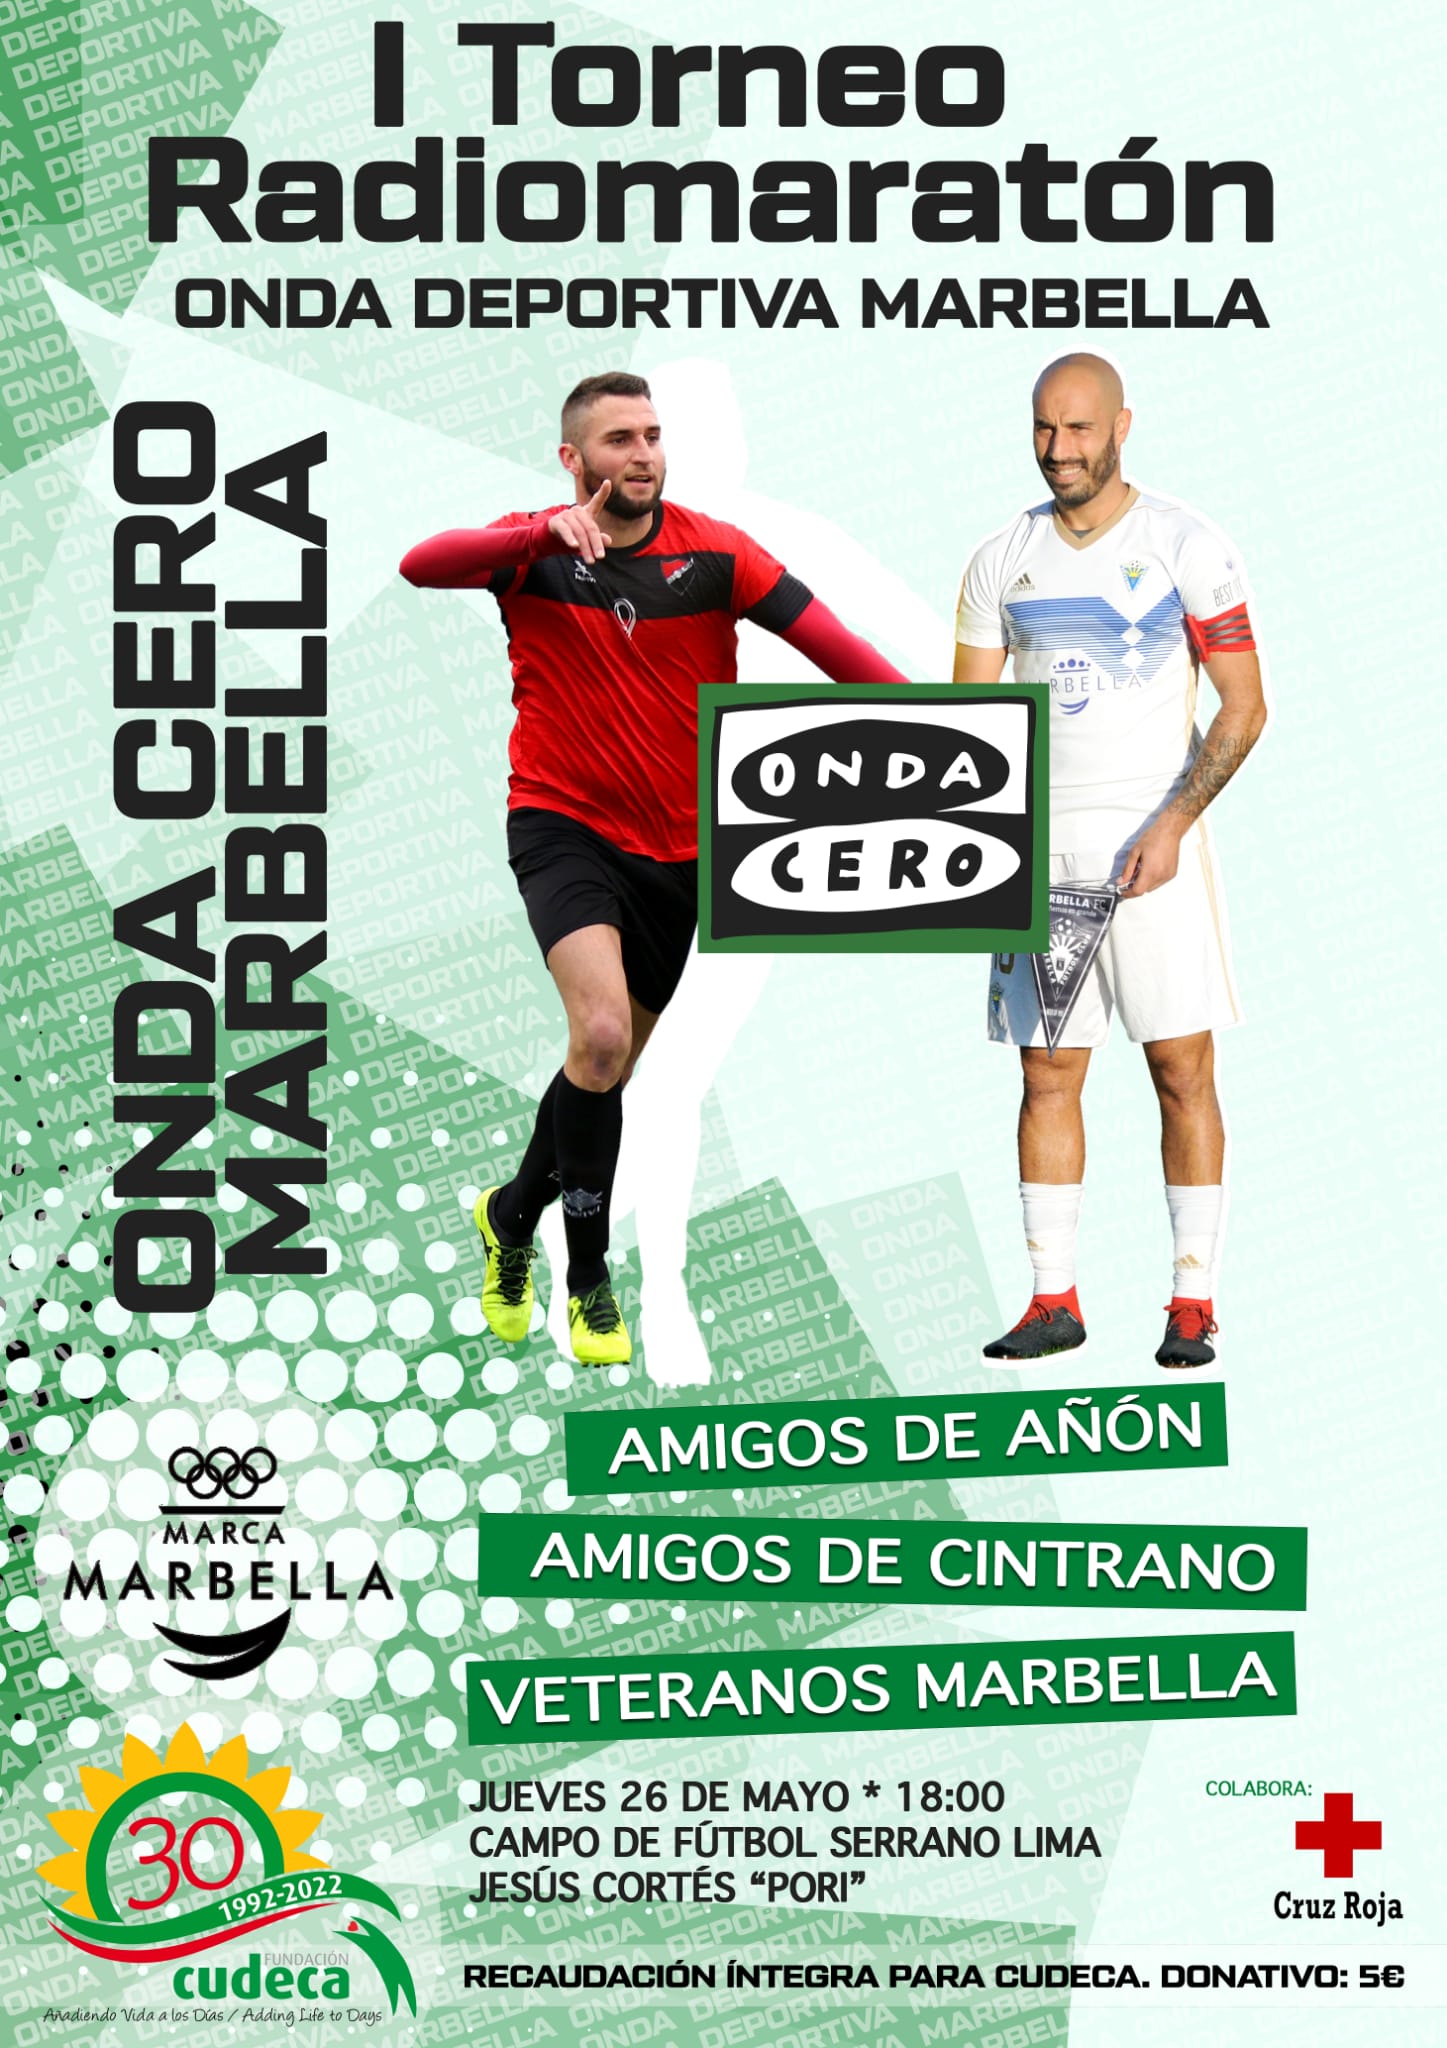 ¡Radiomaratón Onda Cero – Onda Deportiva Marbella por Cudeca!